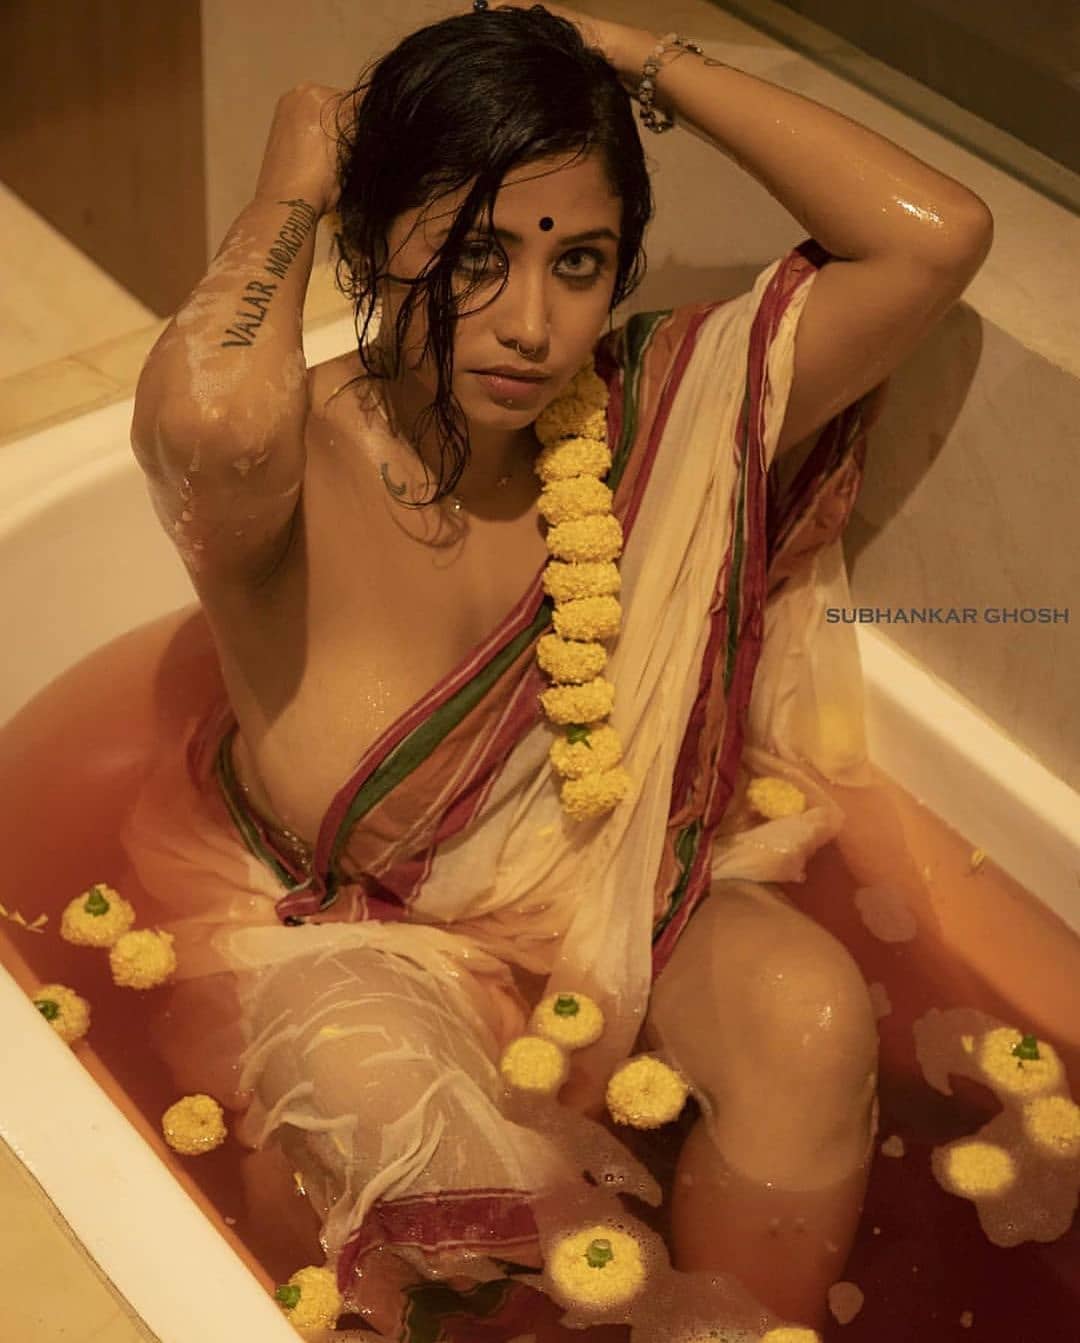 Bangladeshi Sexy 3x - Bangladeshi Woman Big Tits In Bathtub Sexy Xxx Photo -